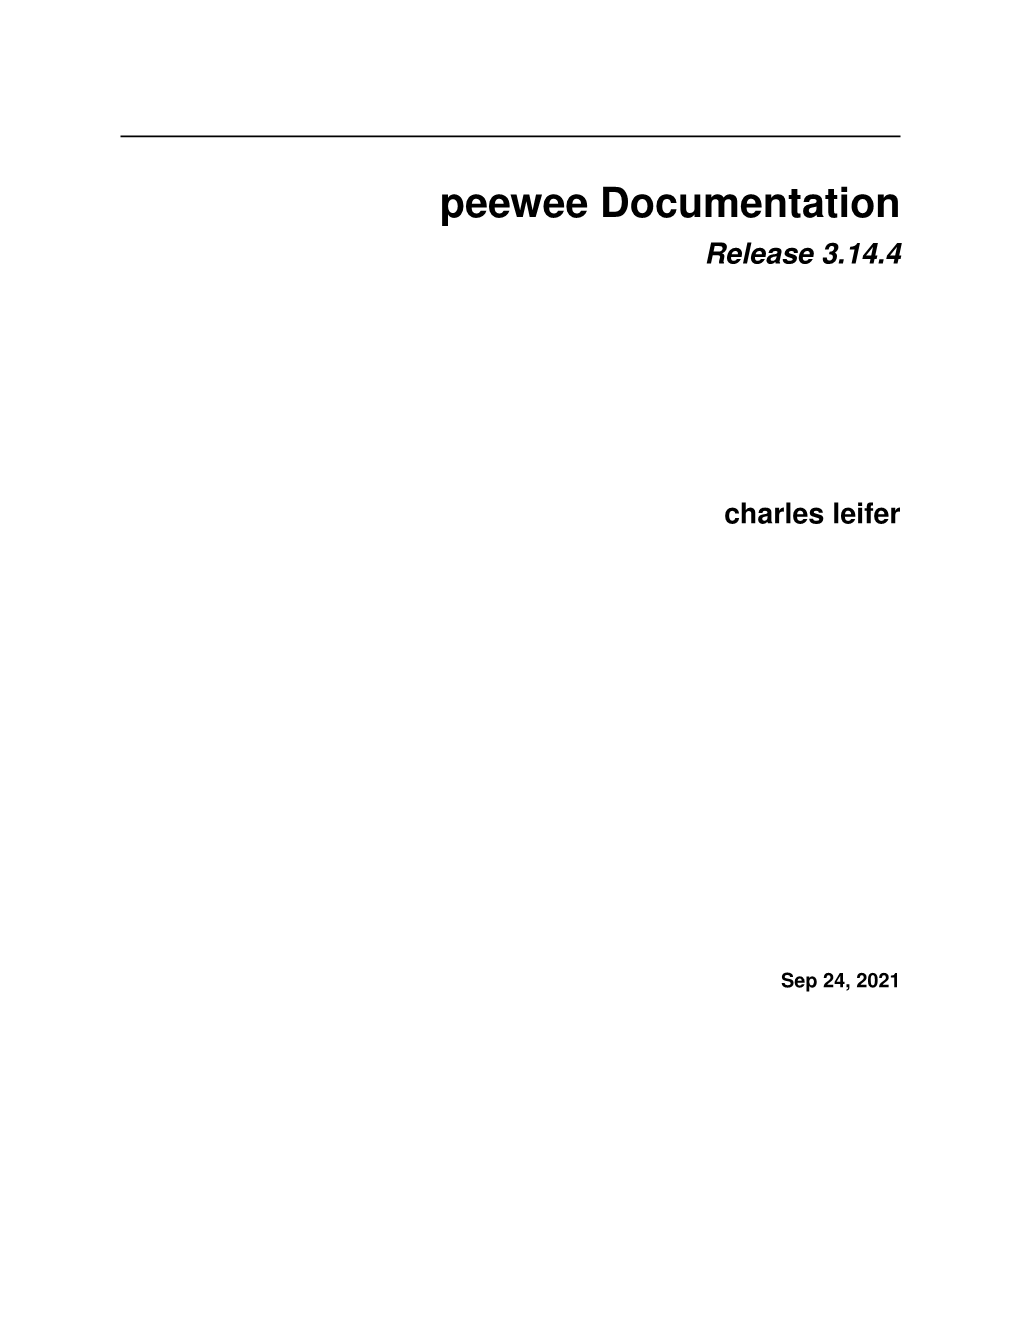 Peewee Documentation Release 3.14.4